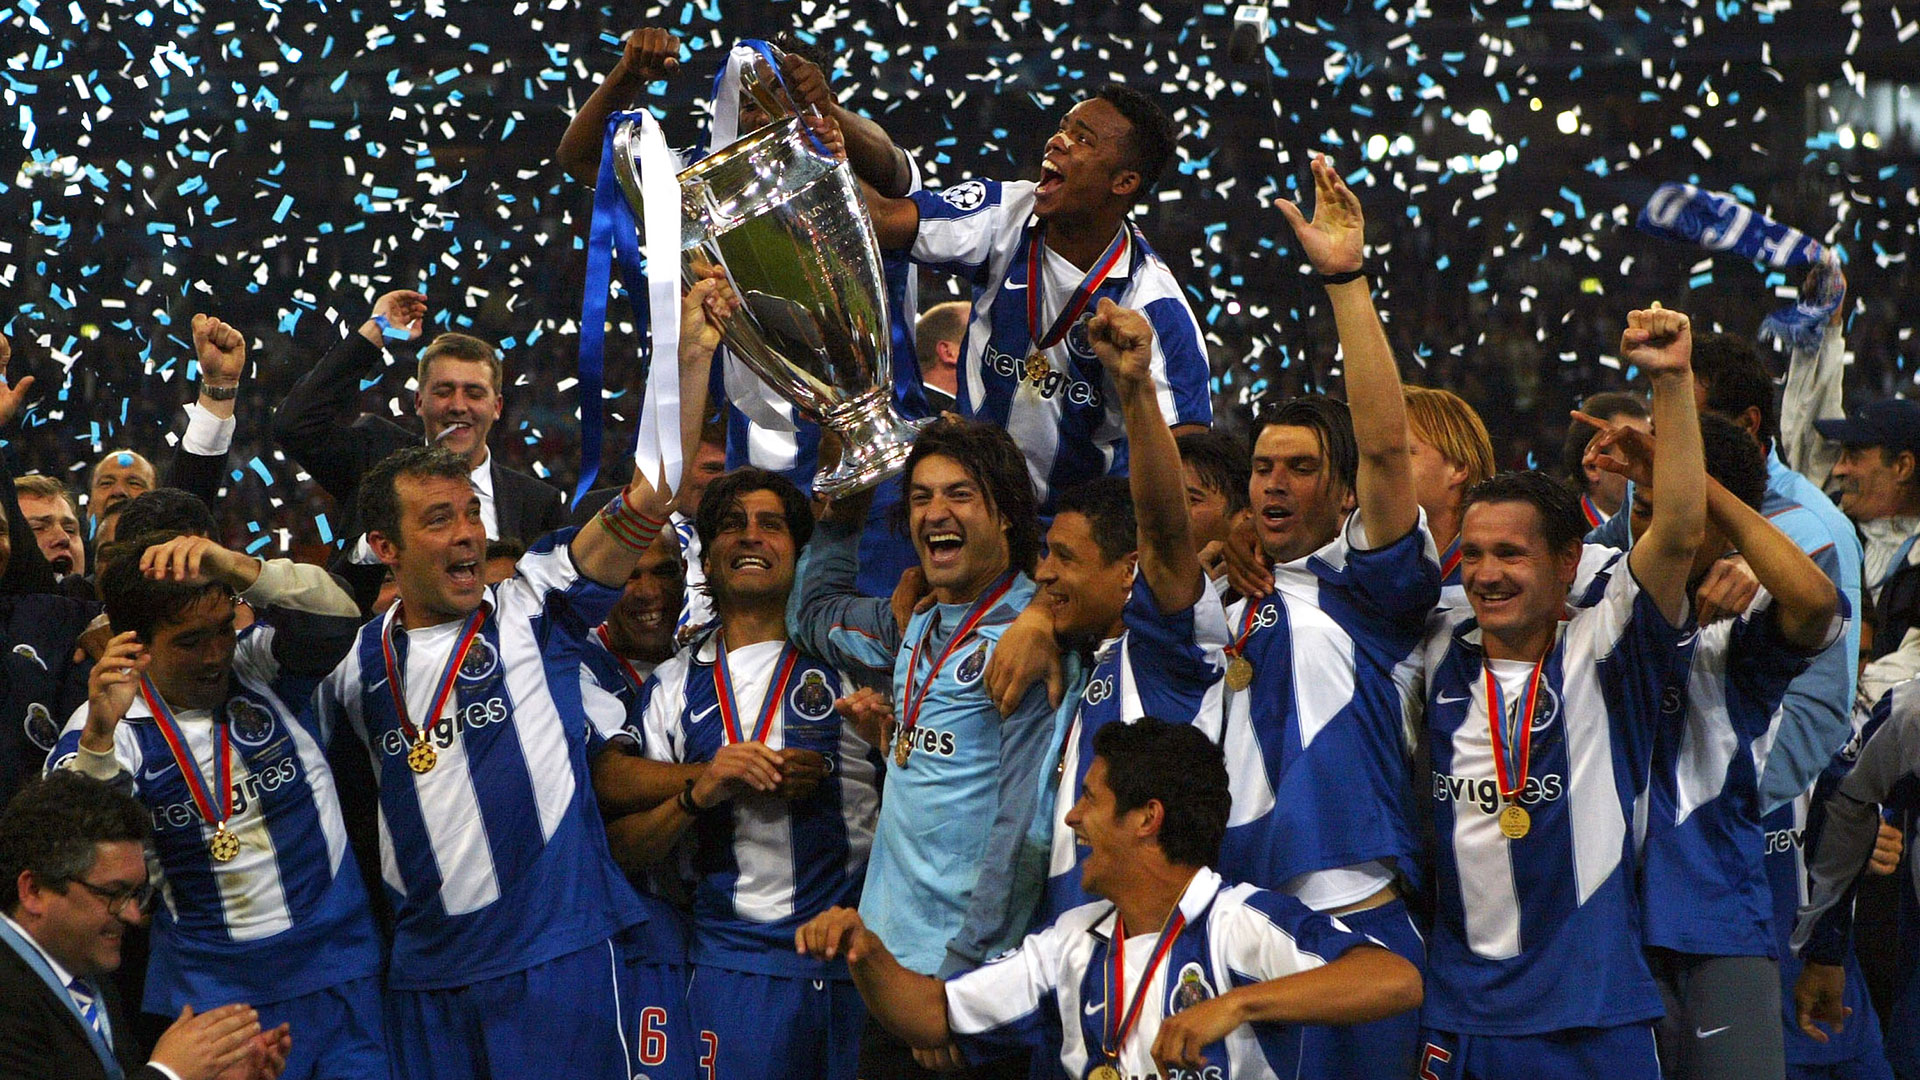 Porto Champions League 2004 - Goal.com1920 x 1080